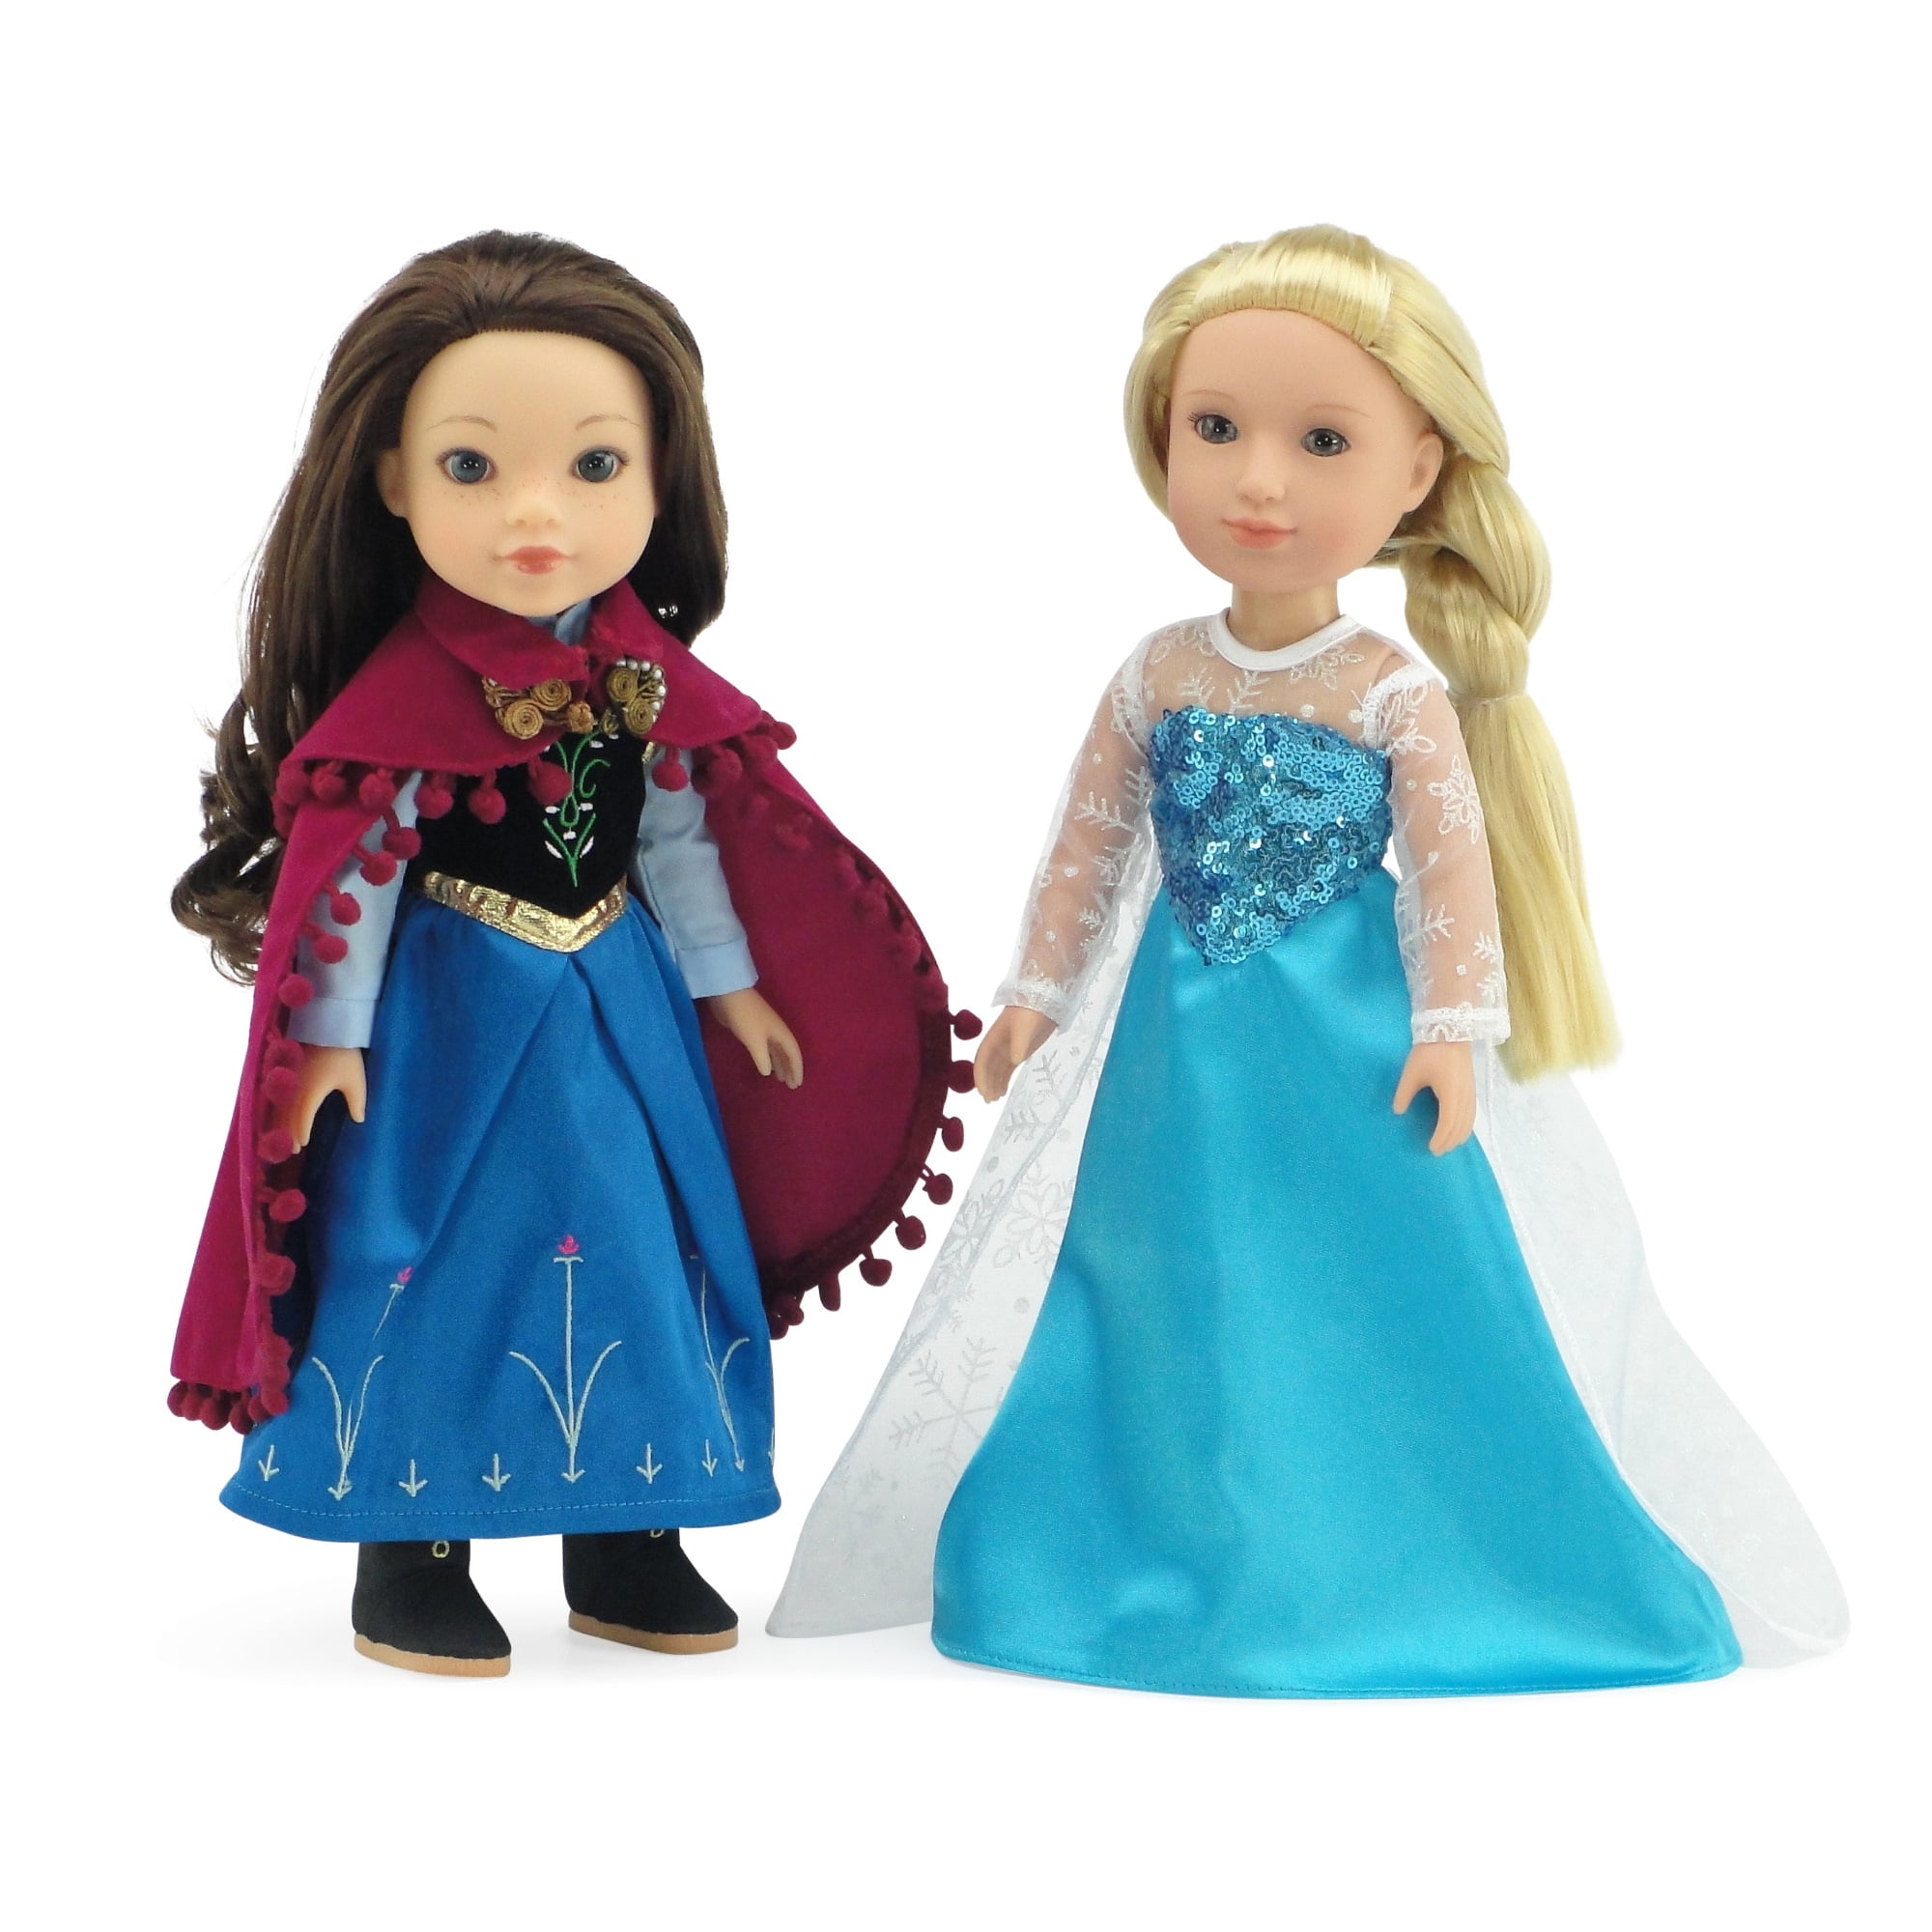 Details about   NEW 1:12 scale dollhouse miniature Disney PRINCESS DOLLS 6 pack EMPTY toy boxes 